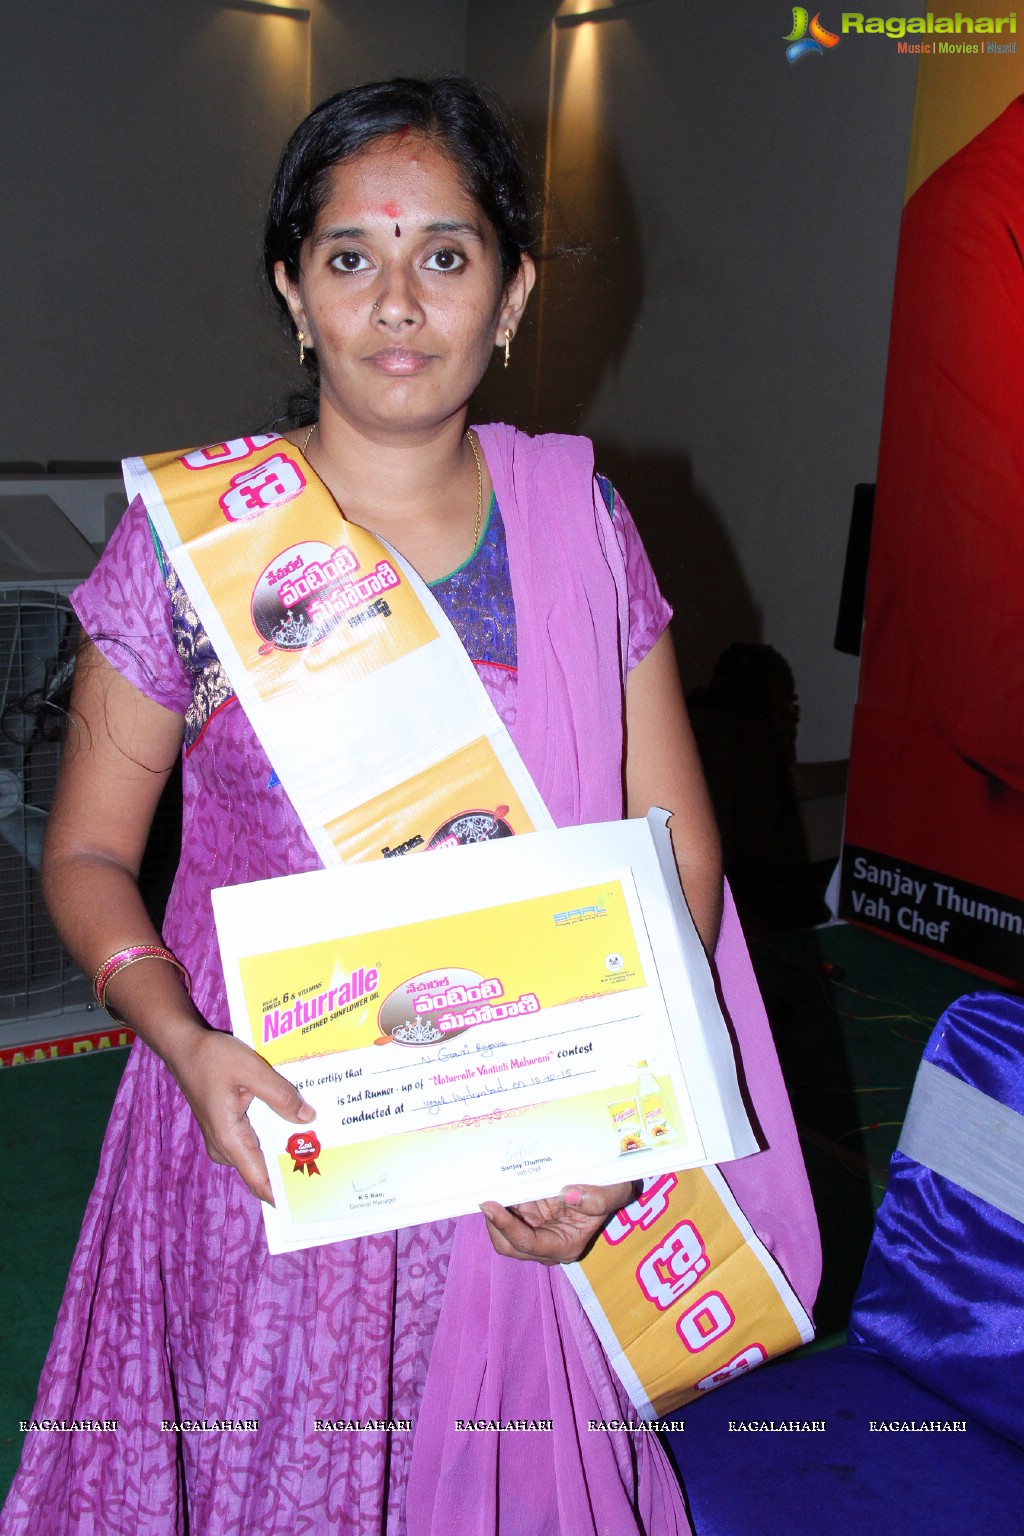 Naturralle Vantinti Maharani Contest at Hyderabad